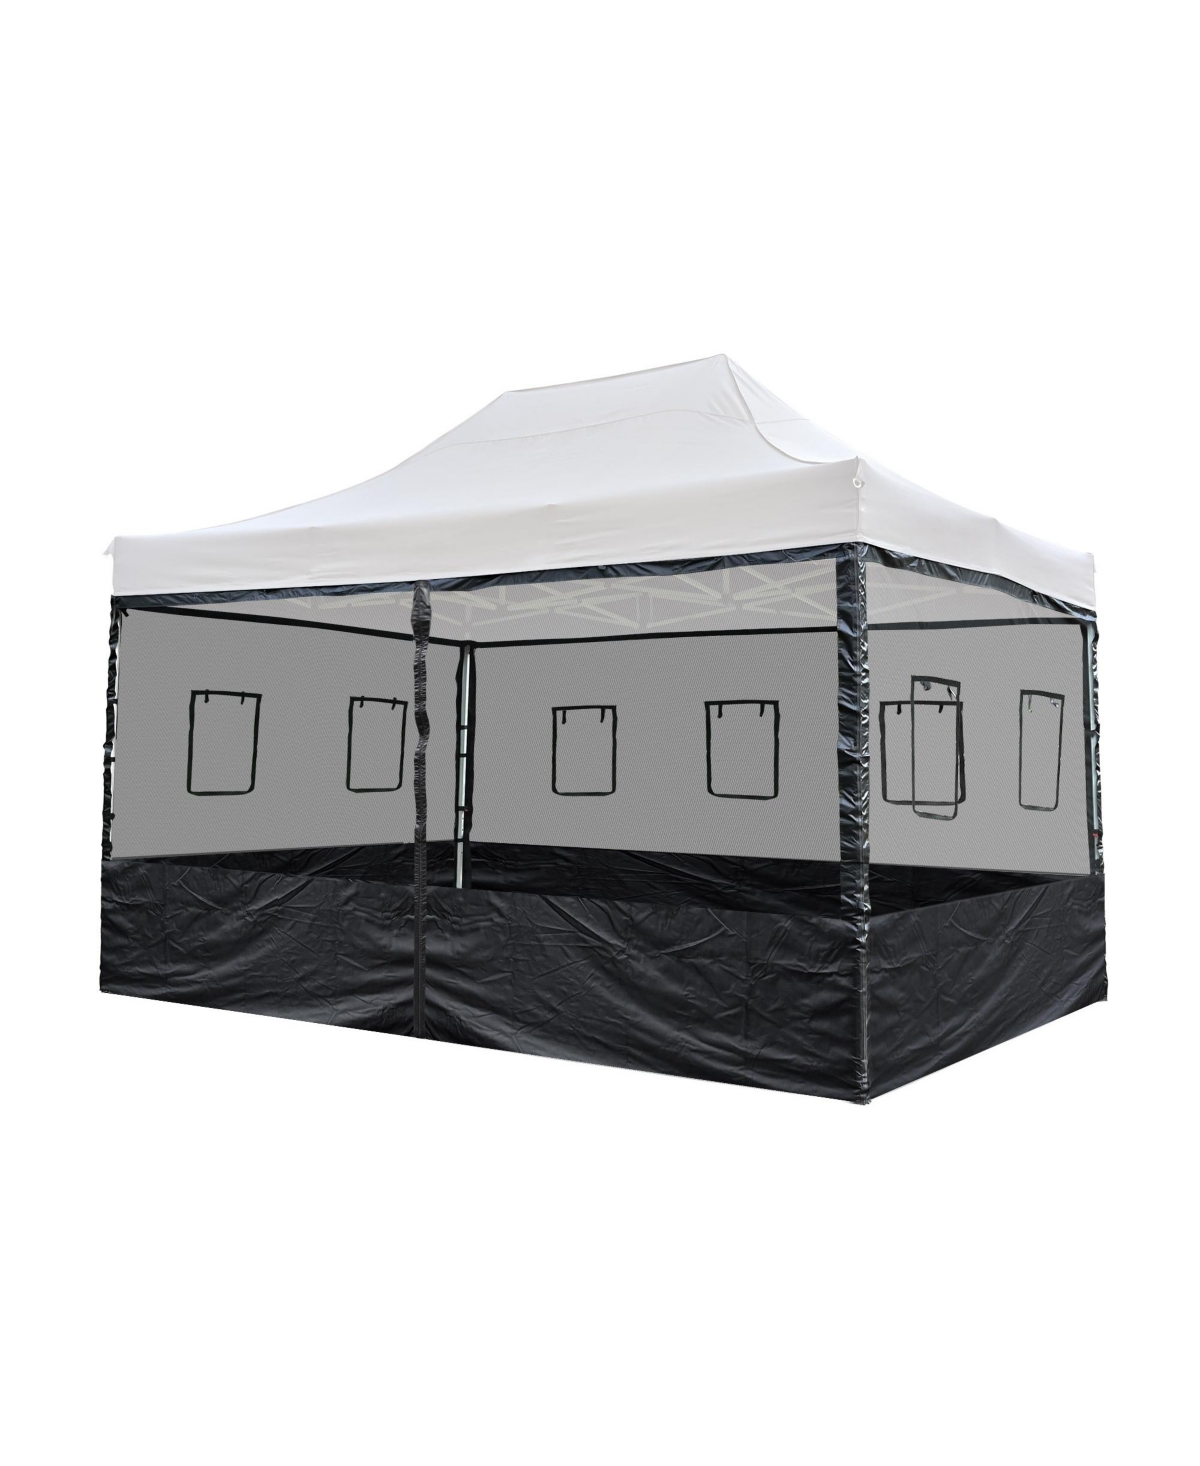 4 Half Mesh Sidewalls for 15x10 Ft Pop Up Canopy Tent w/ Window Food Vendor Fair - Open Miscellaneous